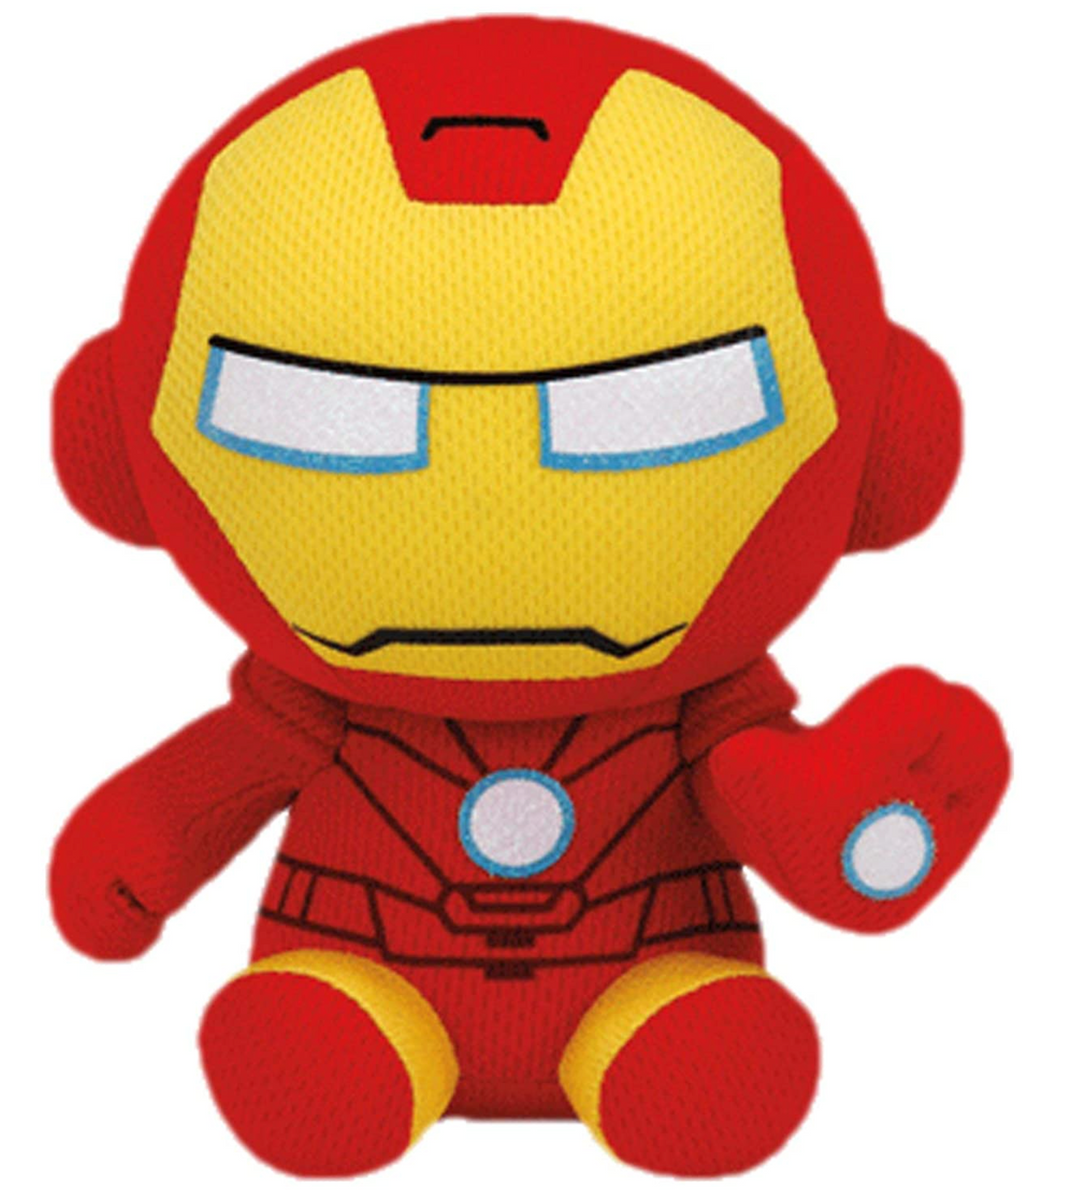 Ty Marvel Iron Man Beanie Babies Plush